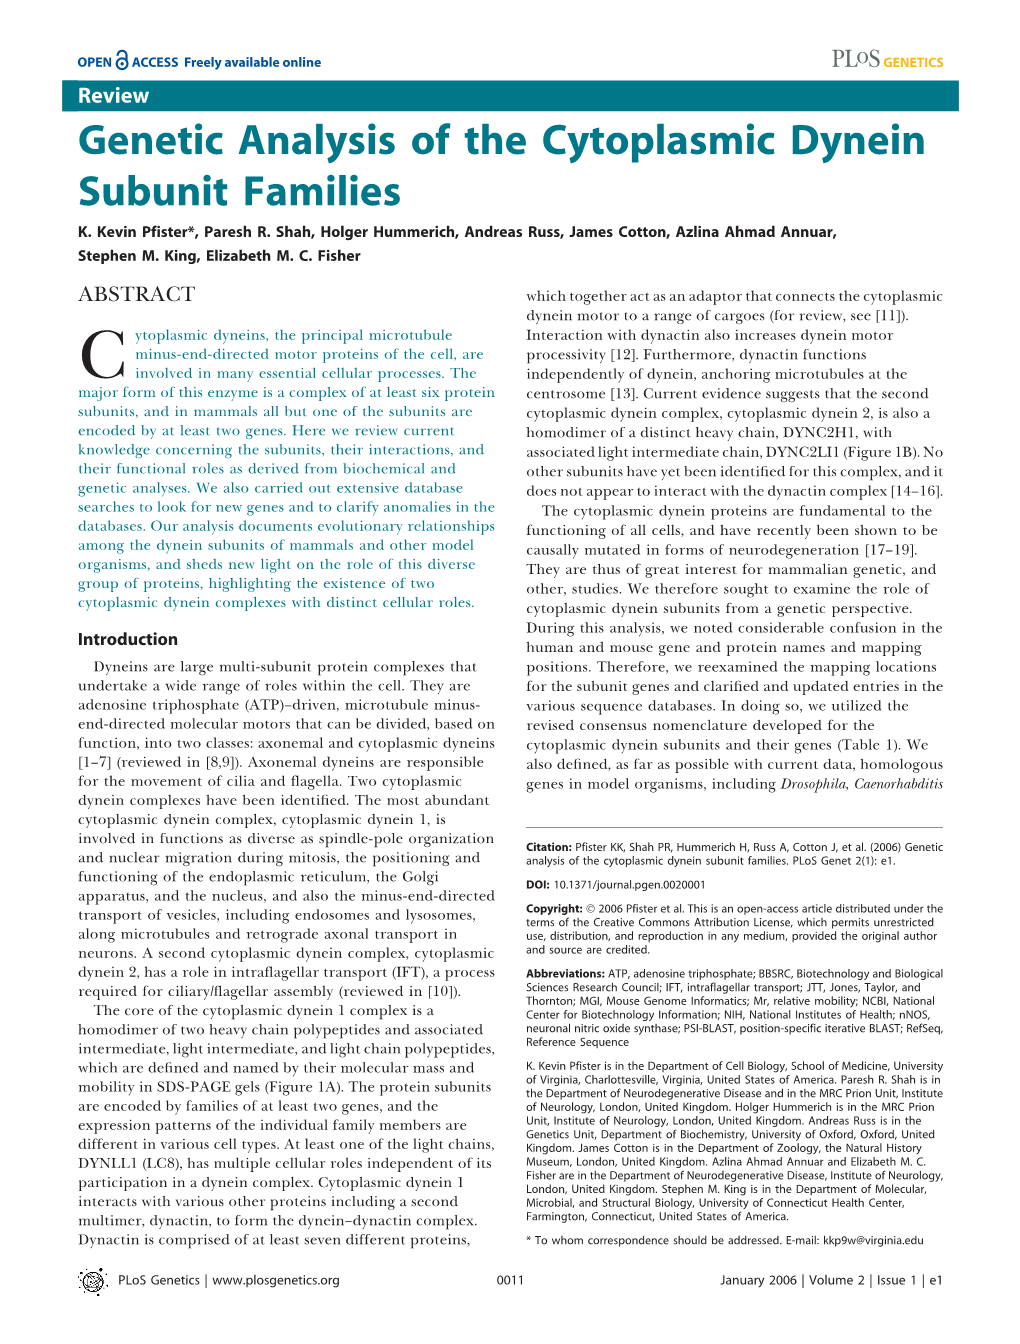 Genetic Analysis of the Cytoplasmic Dynein Subunit Families K